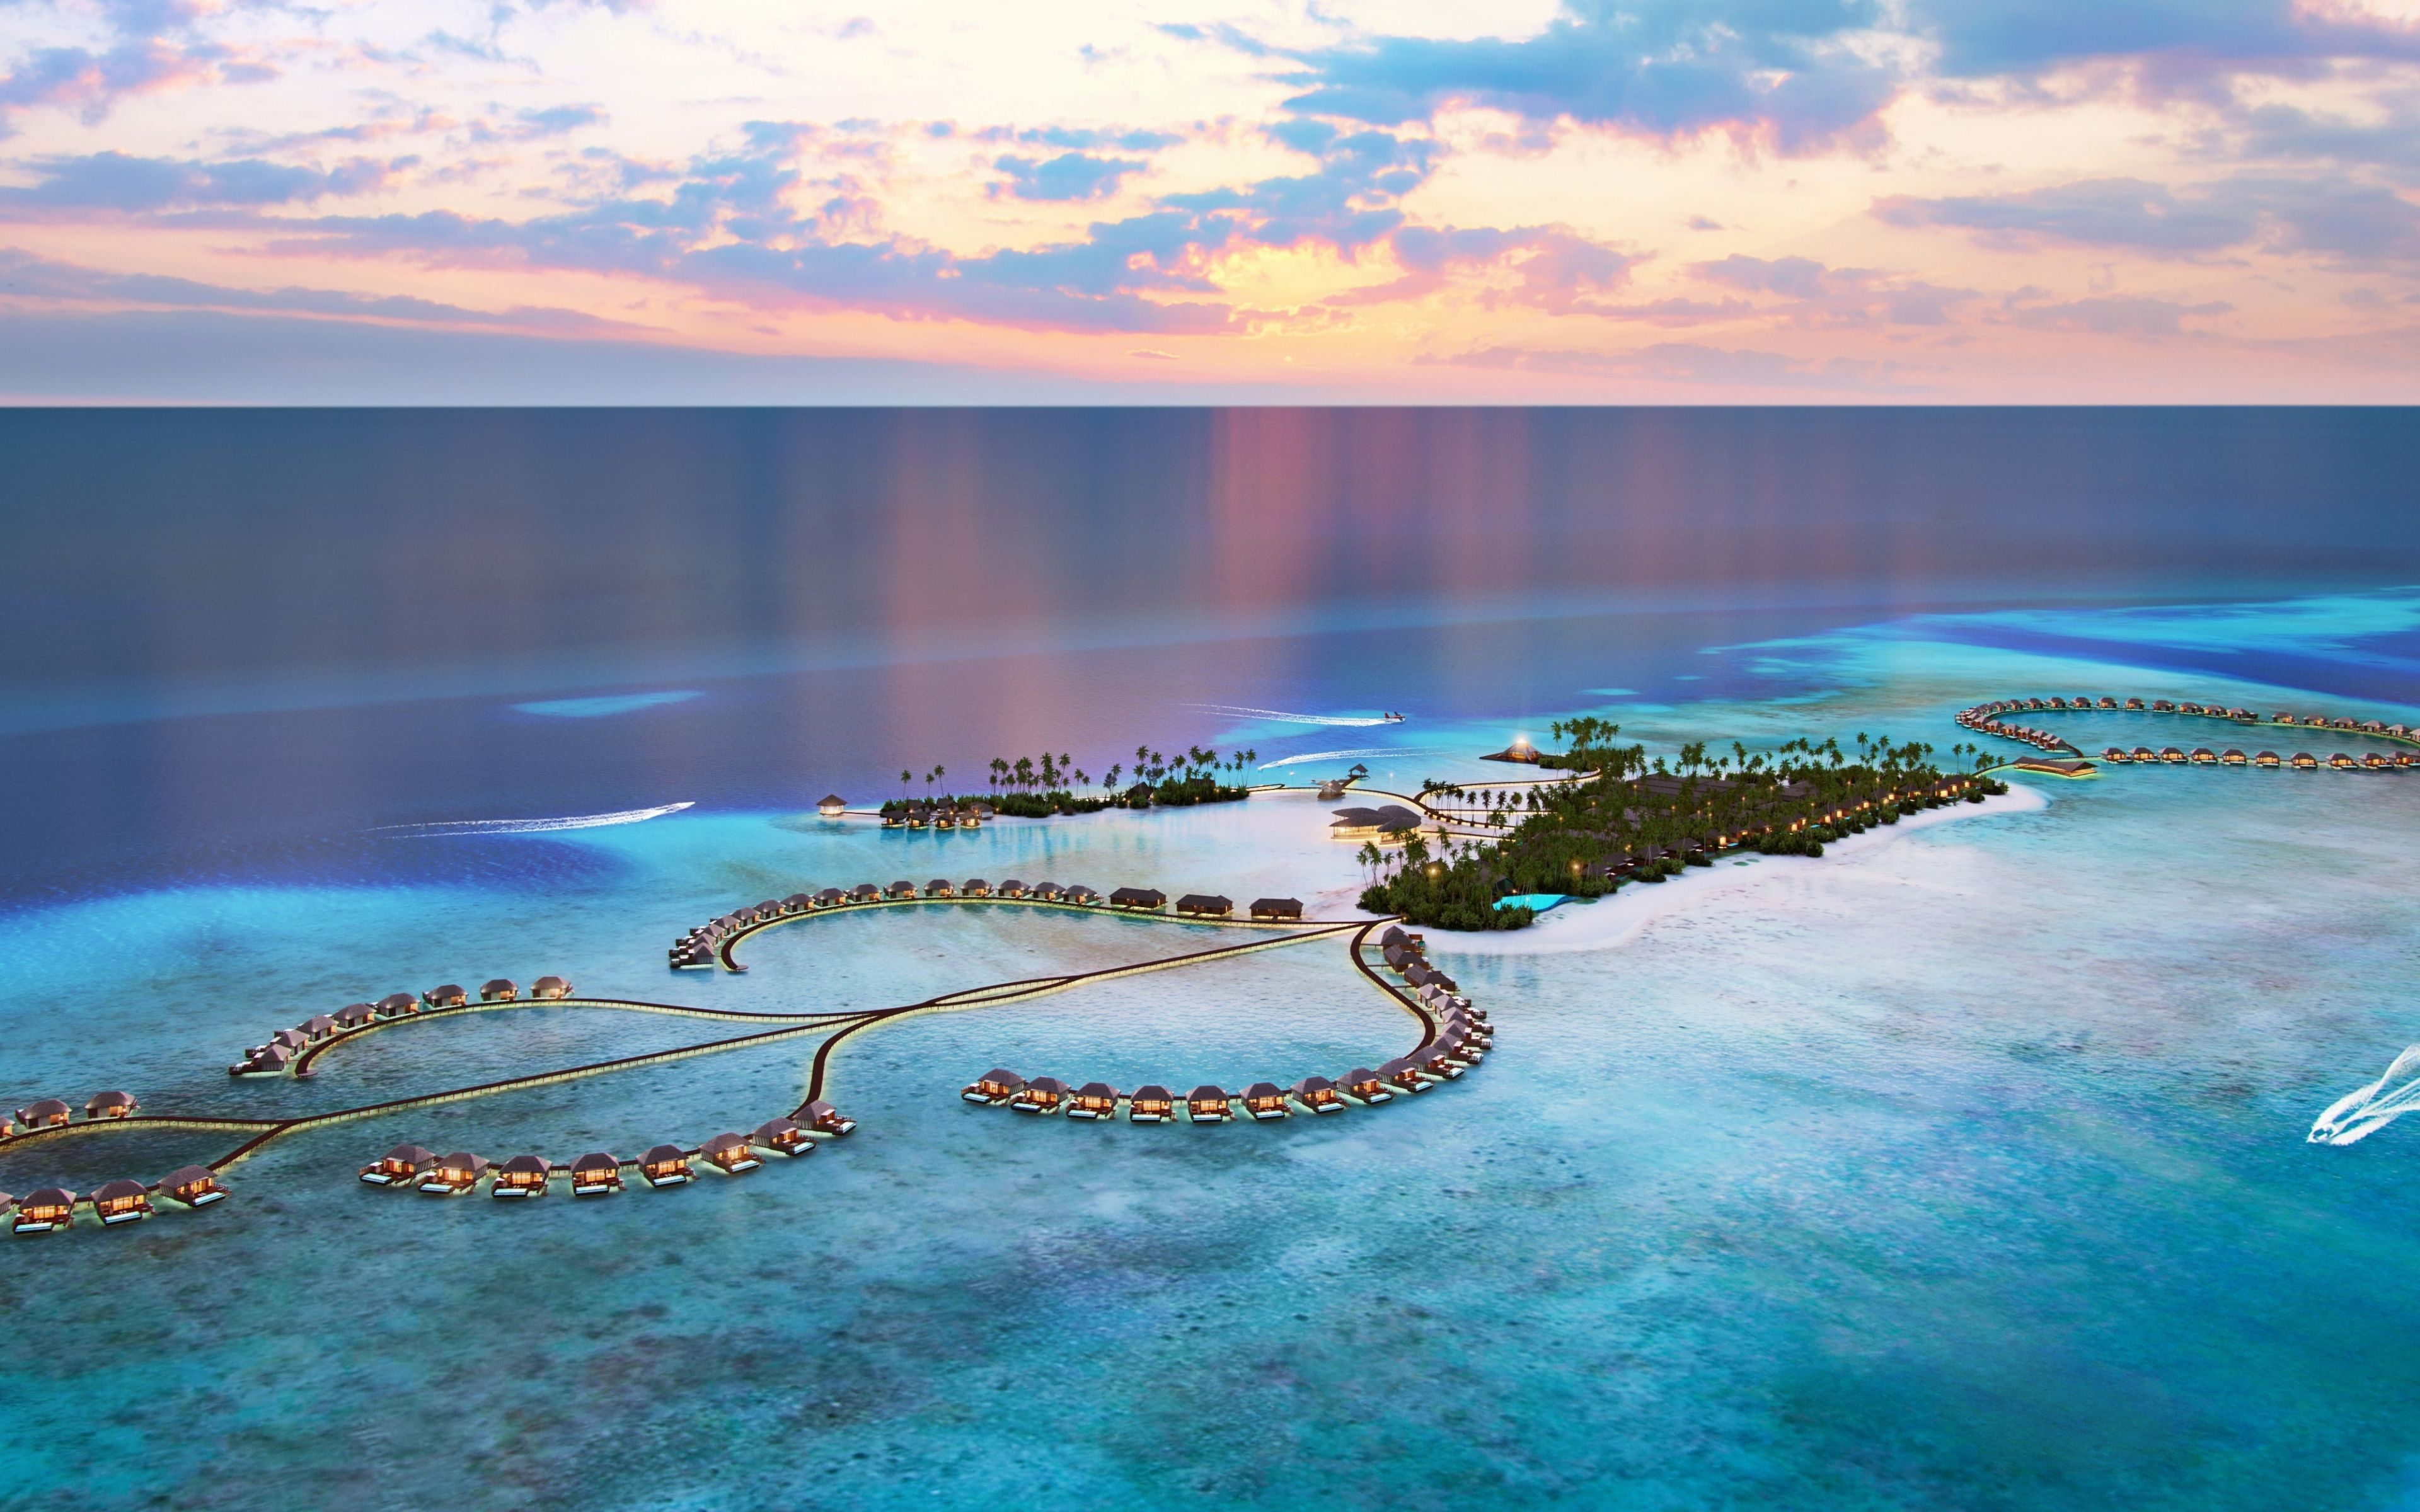 Download 3840x2400 wallpaper maldives, resorts, aerial view, island, sea, 4k, ultra HD 16: widescreen, 3840x2400 HD image, background, 5568